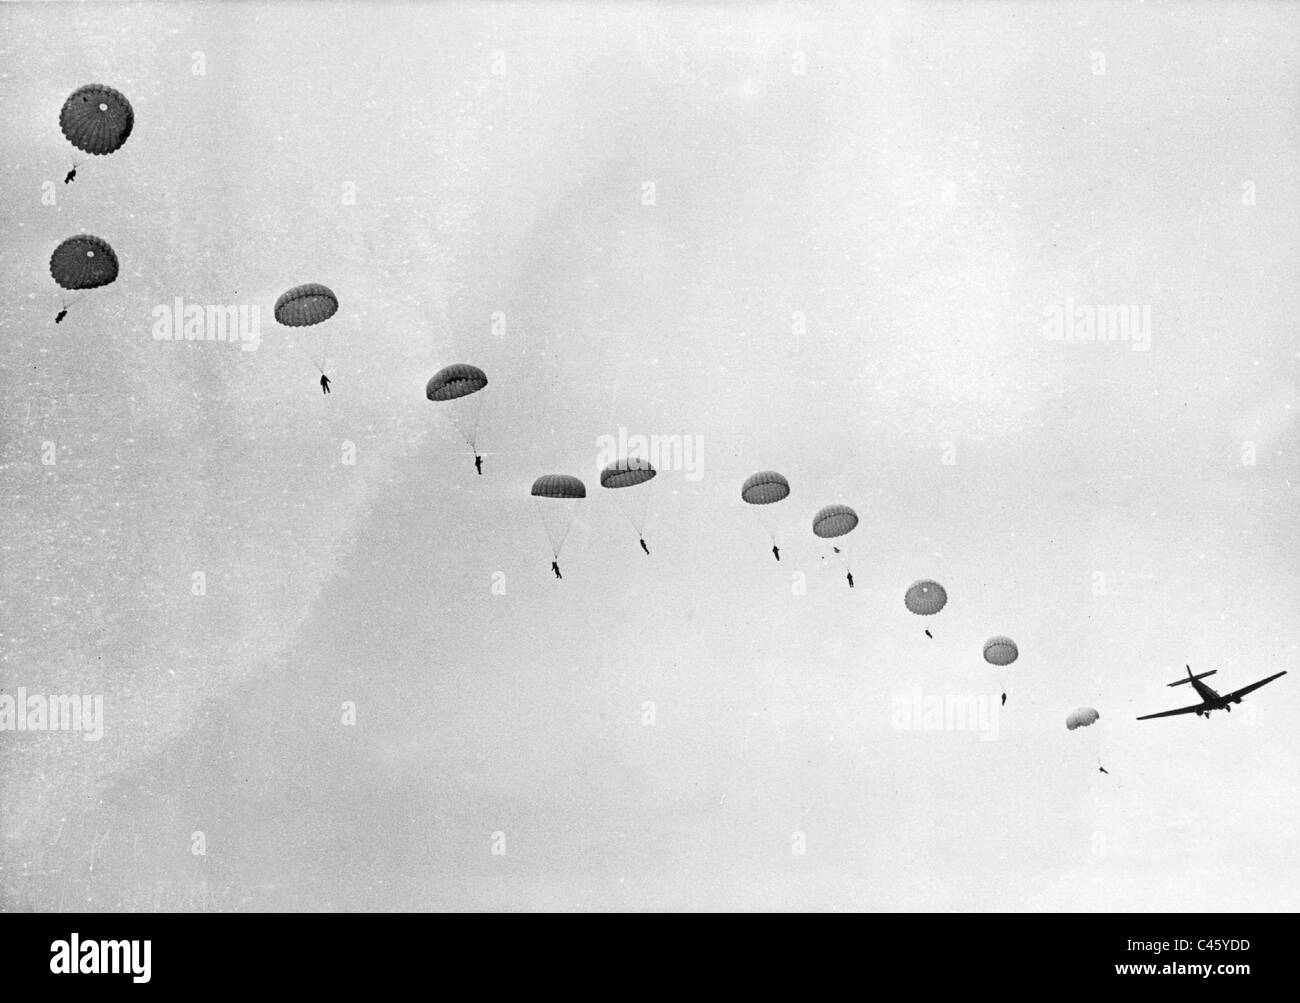 Practice jump of German paratroopers in Stendal, 1939 Stock Photo